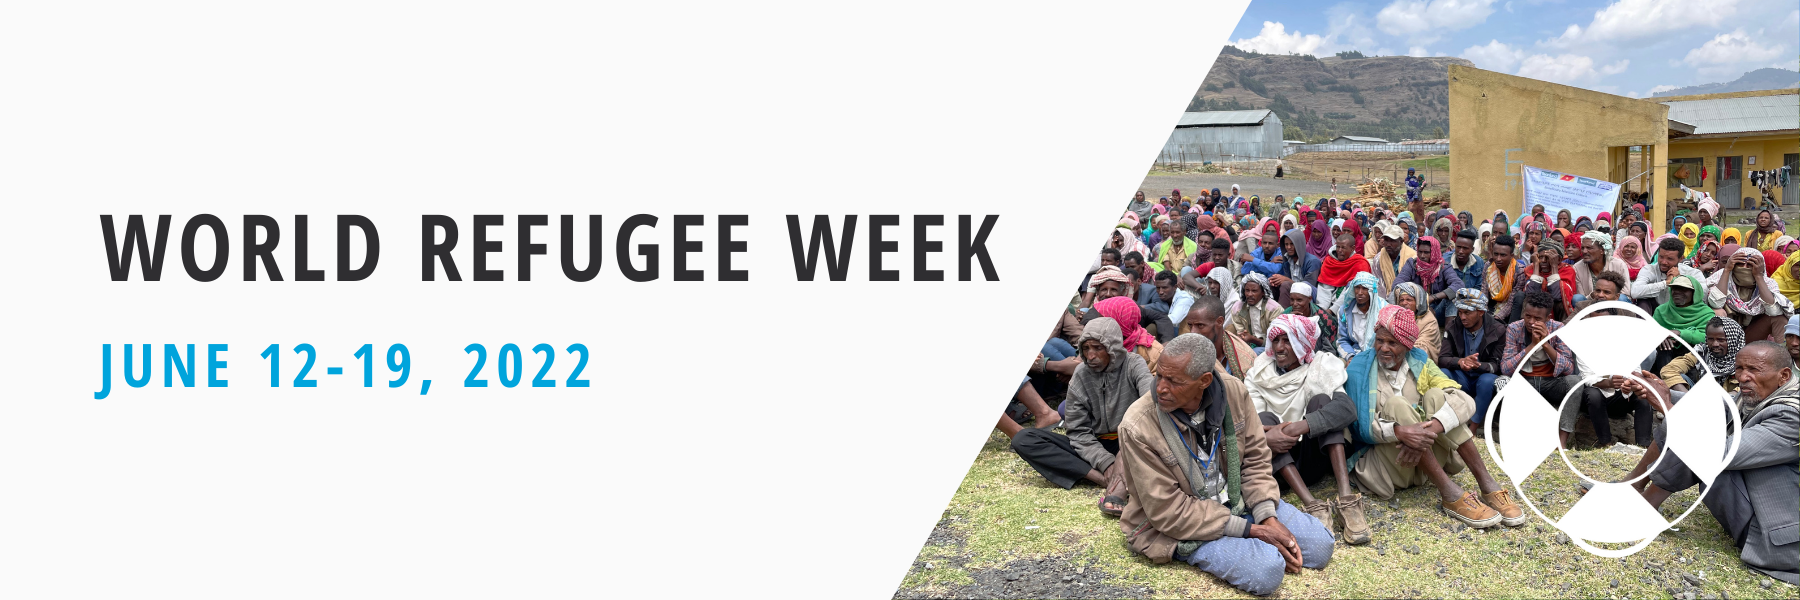 World Refugee Week 2022